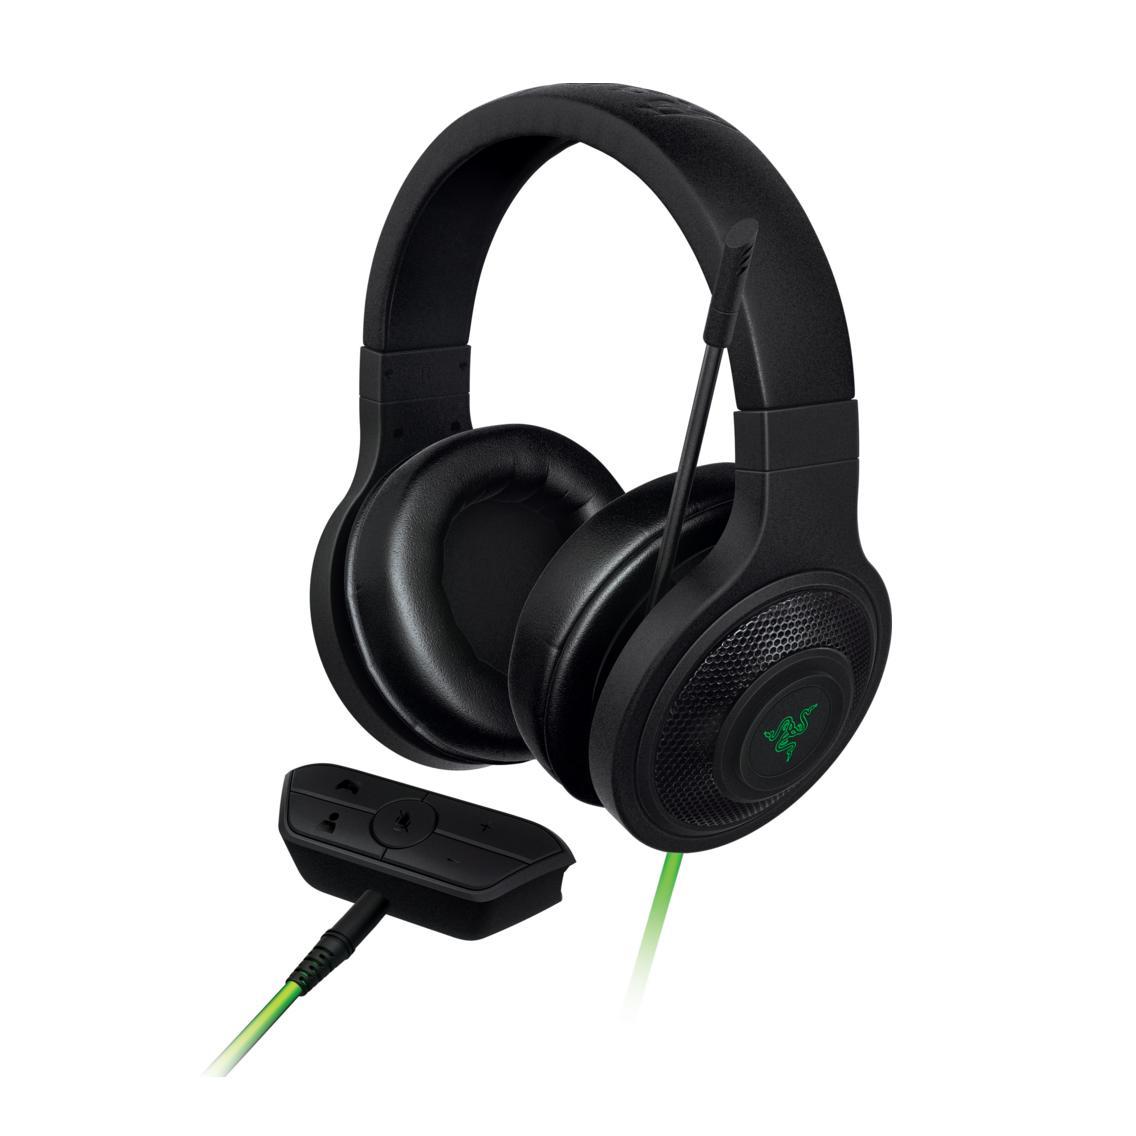 Image of Kraken Gaming Headset for Xbox One